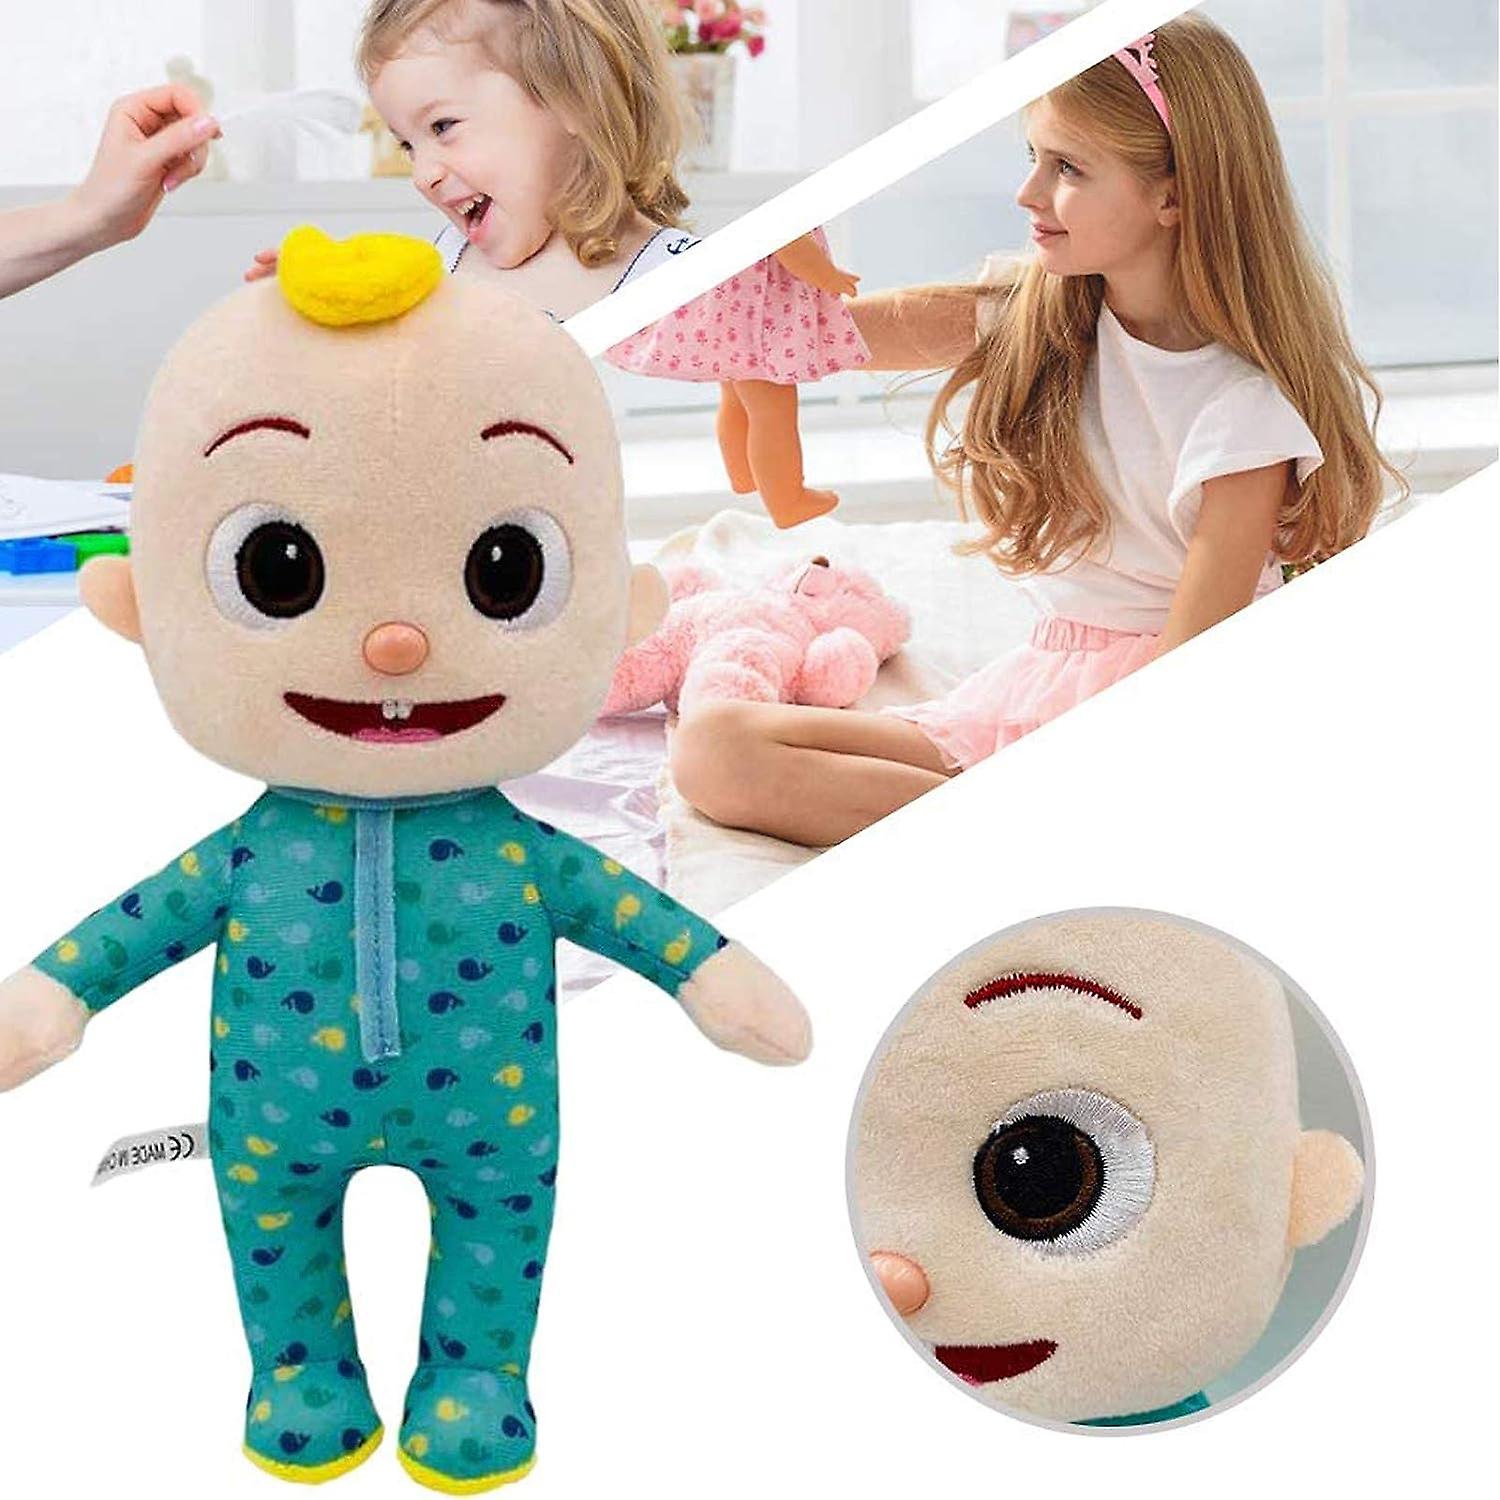 Jj Plush Stuffed Toy. Cartoon Plush Stuffed Animal Toys. Cute Animal Boy Doll Toy. Suitable For Birthday Gifts， Family Dolls (jj)